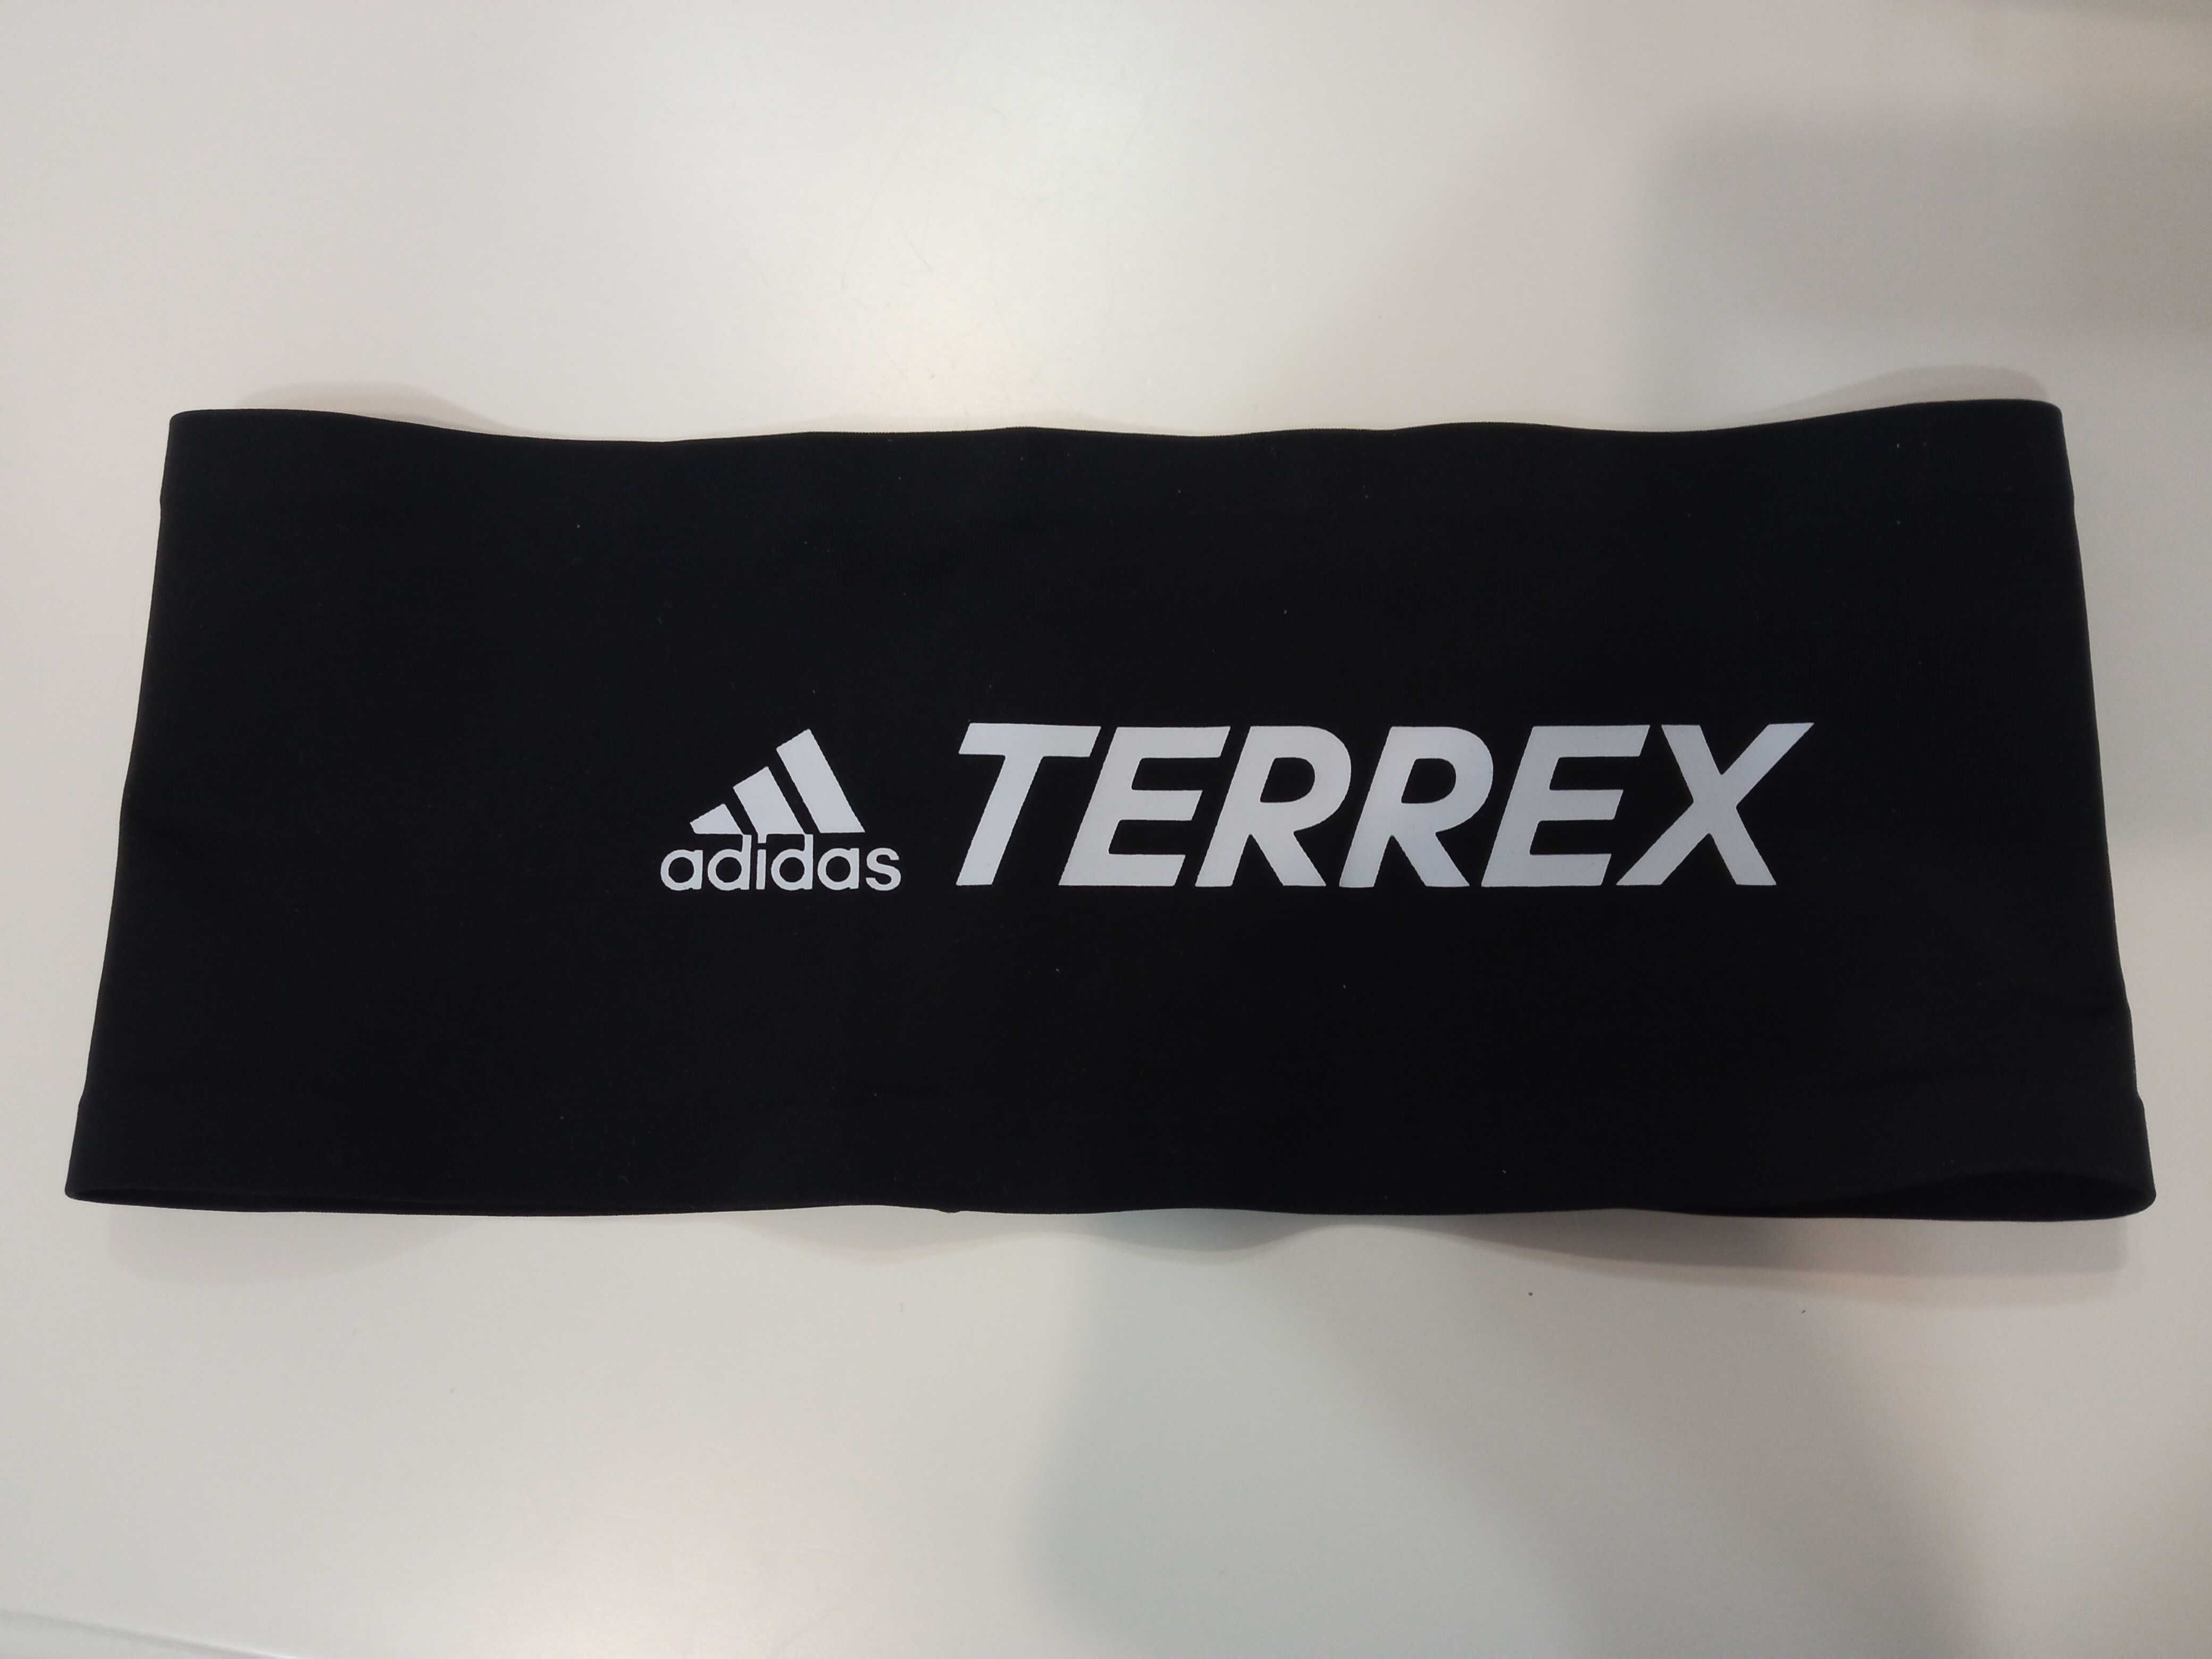 Пов'язка Adidas Terrex чорна,пов'язка унісекс,пов'язка біг/спорт